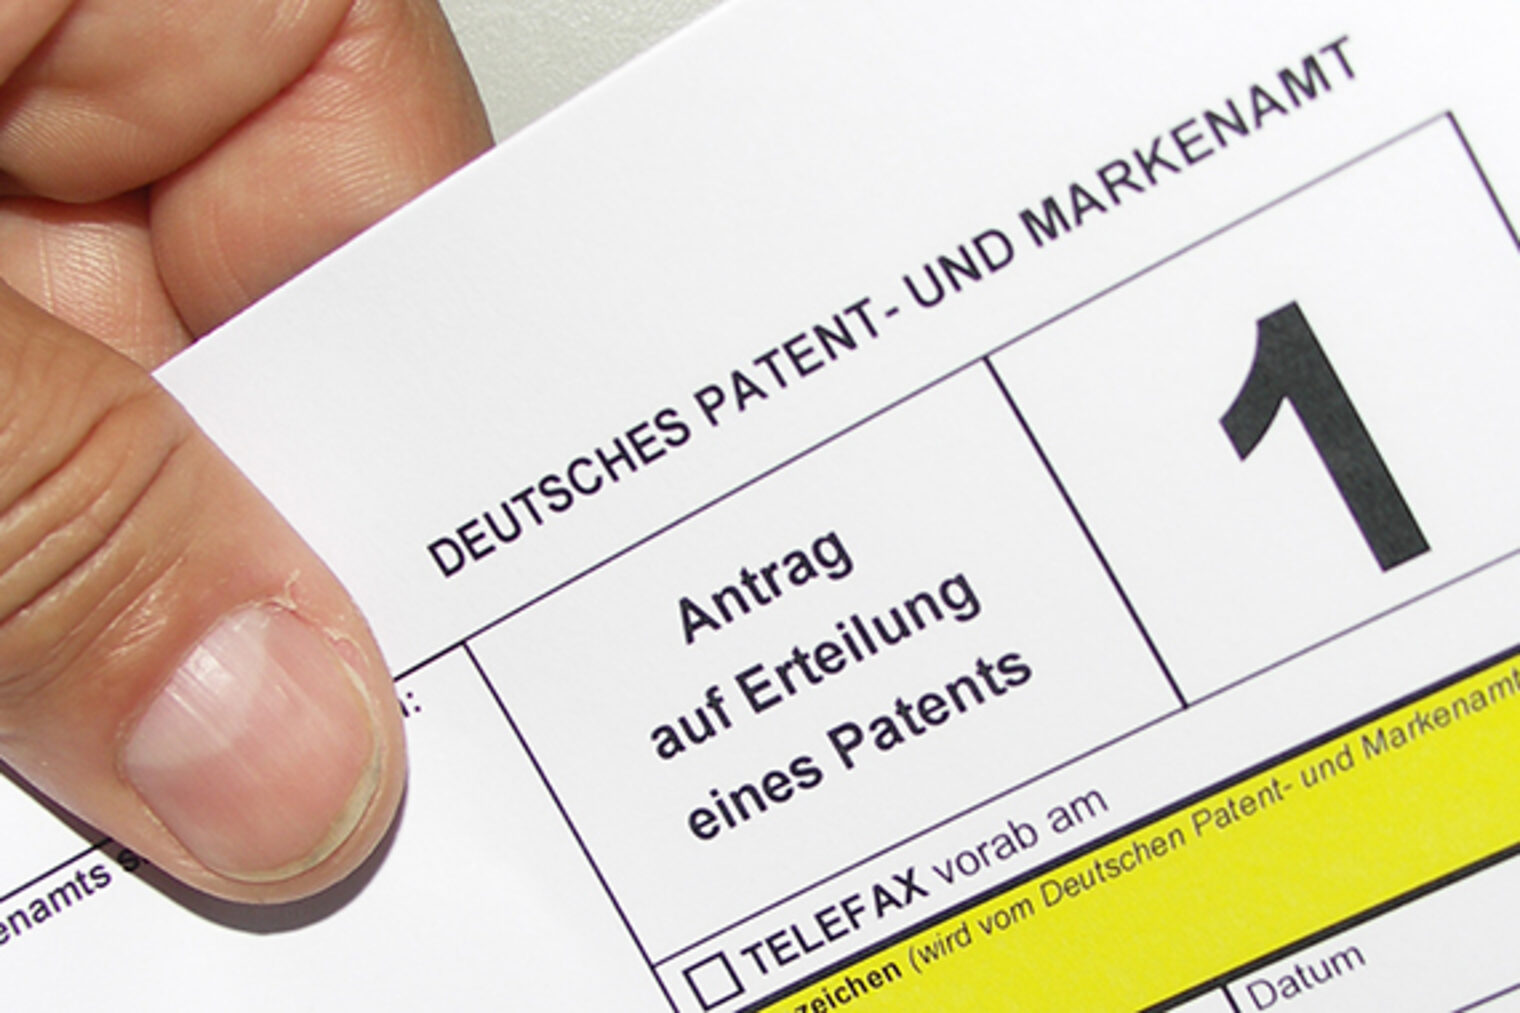 Hand Patent Patentanmeldung Papier Formular